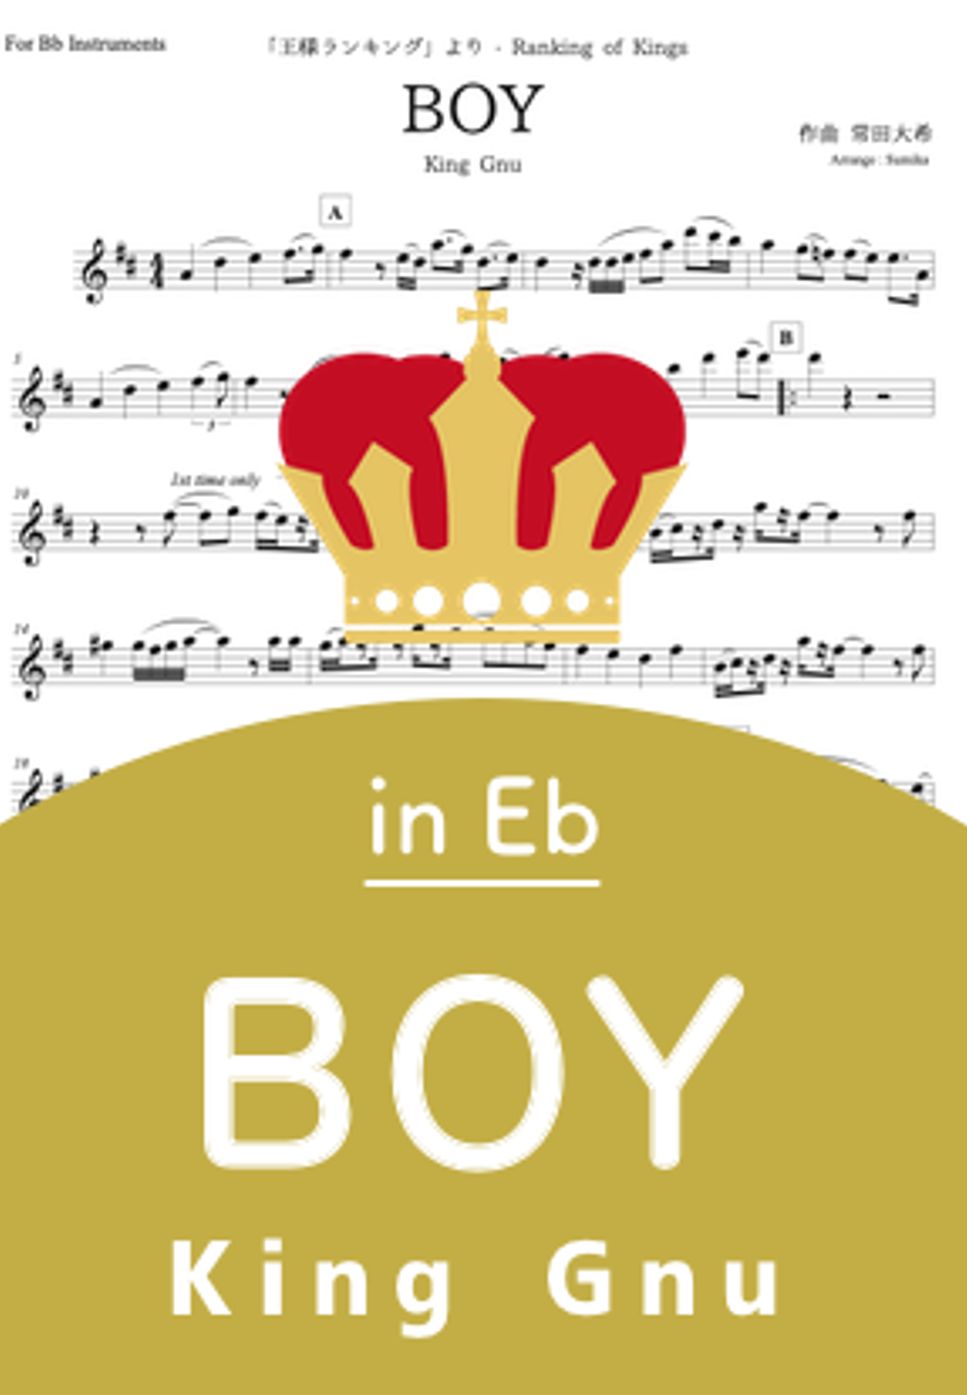 Ranking of Kings - BOY / King Gnu (in Eb) by Sumika